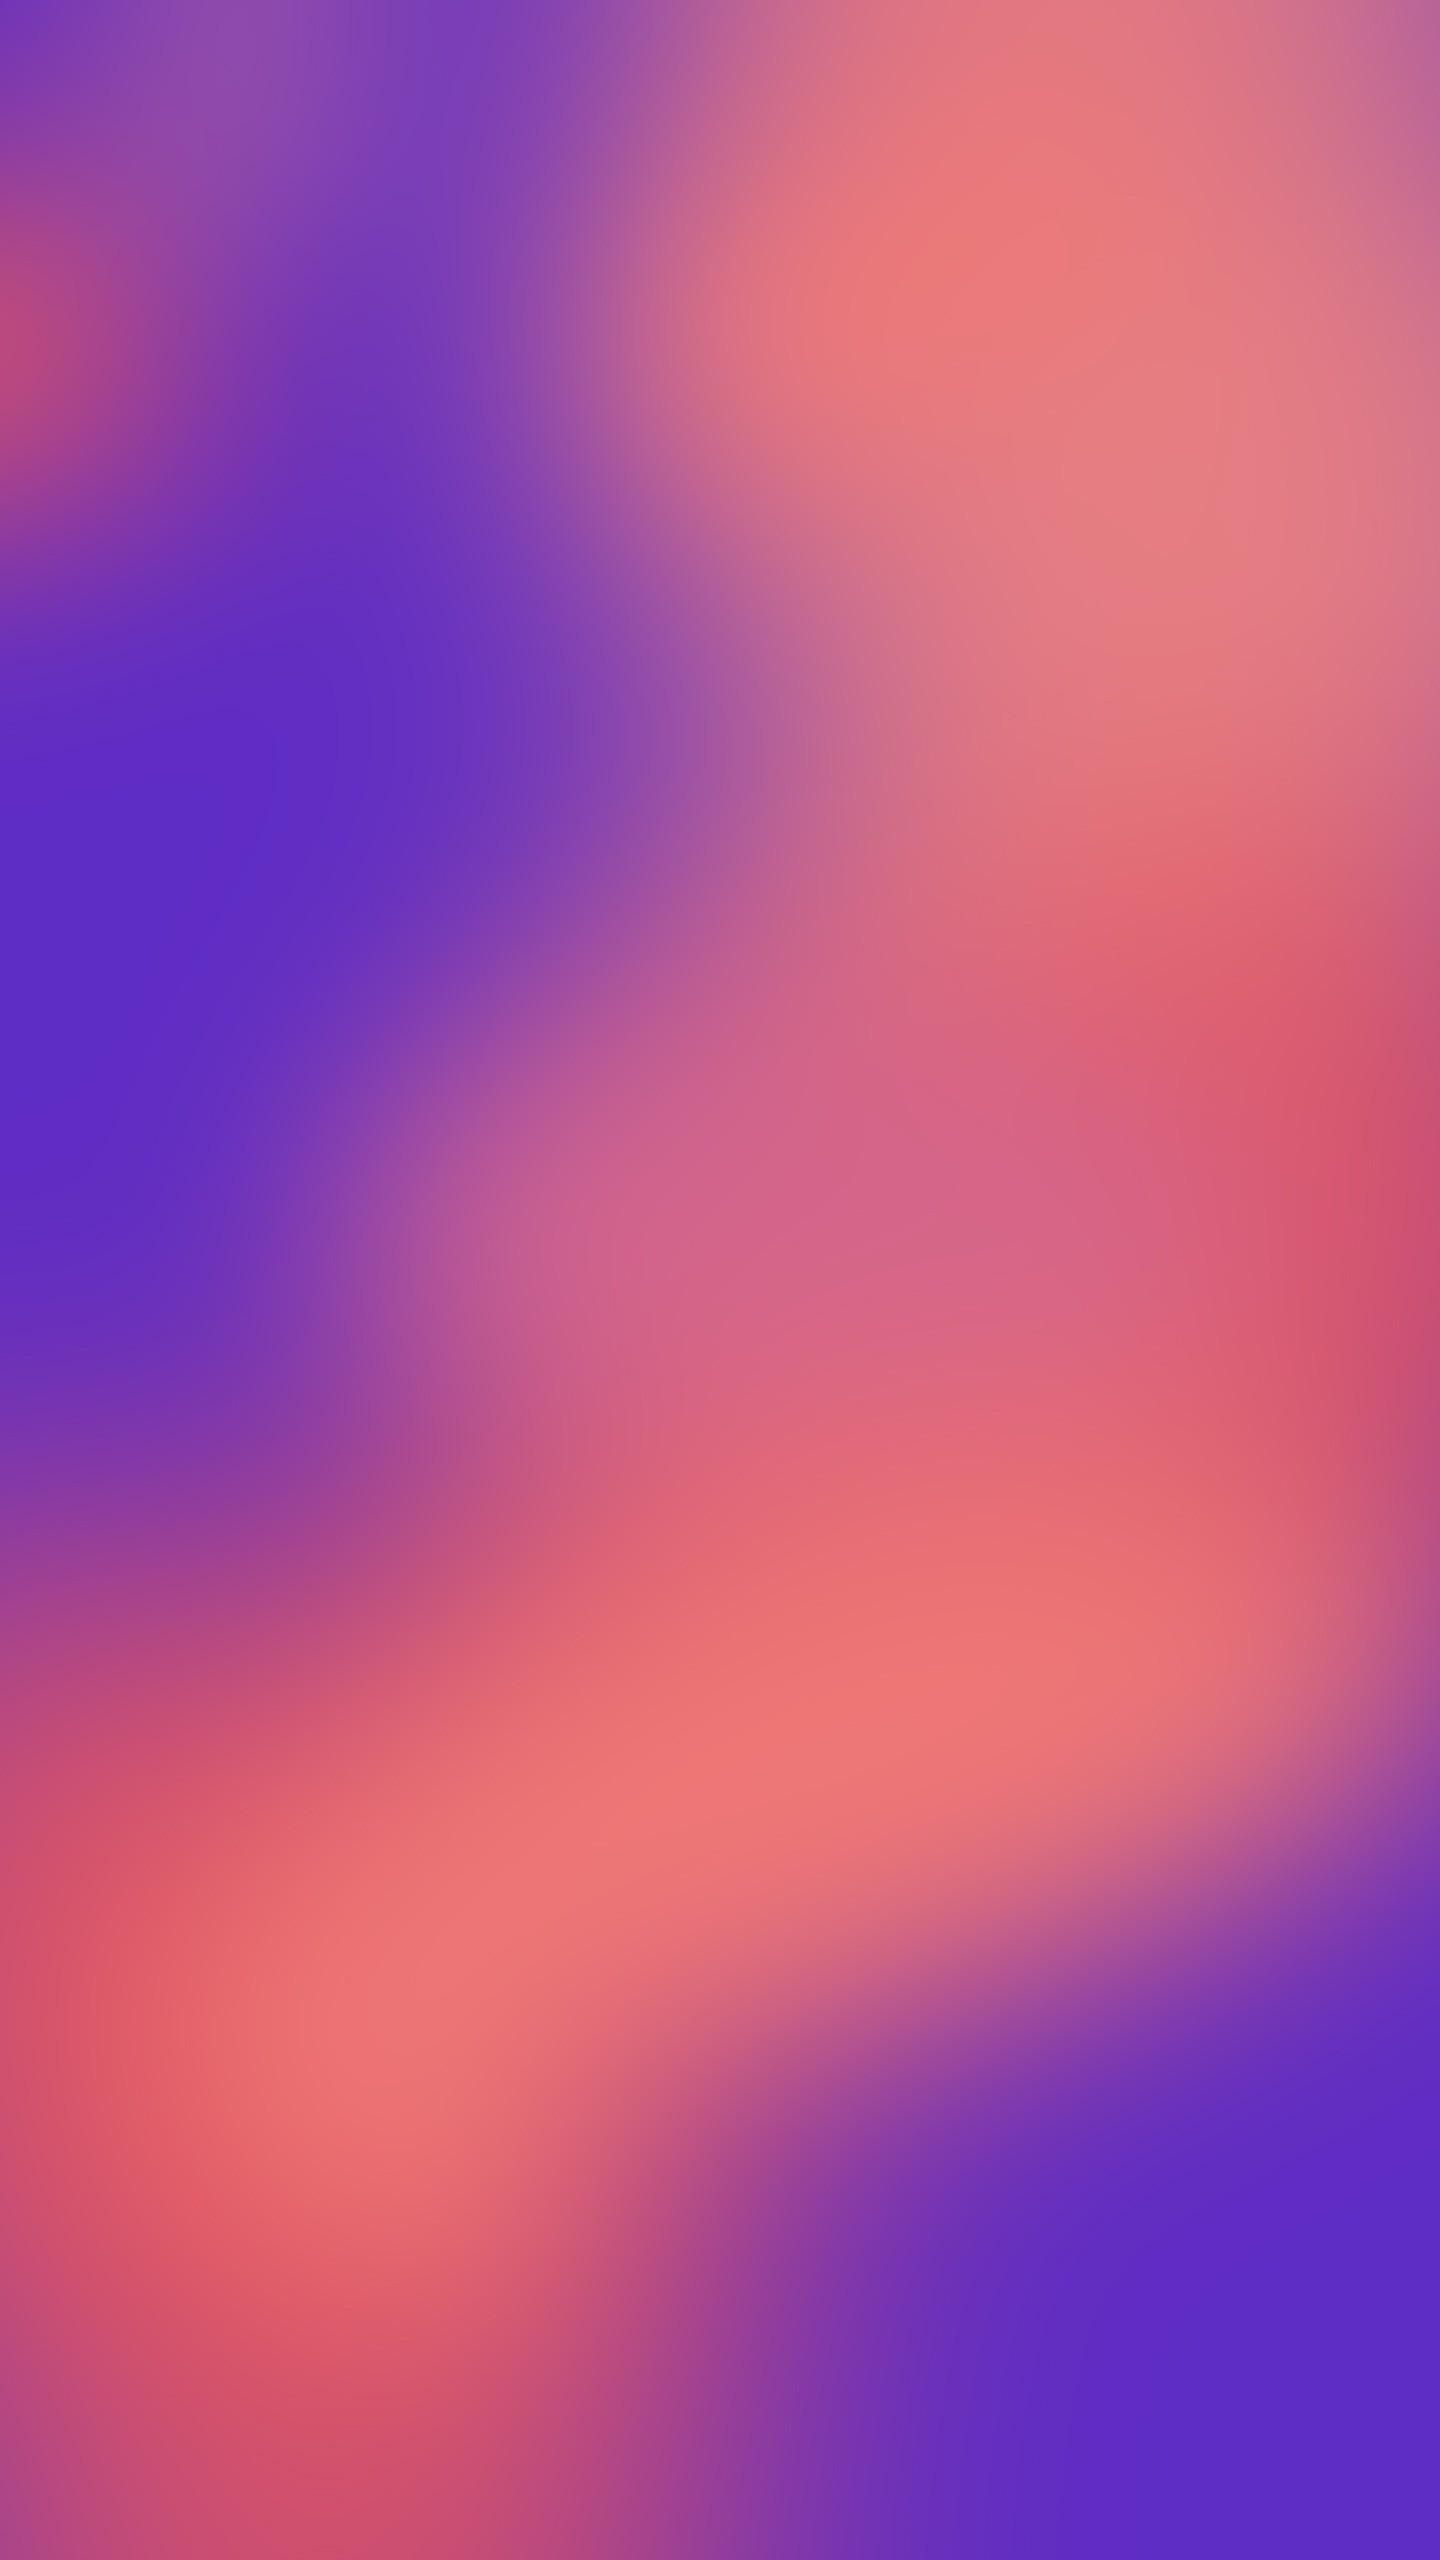 google pixel xl wallpaper hd,rosa,violett,himmel,lila,blau